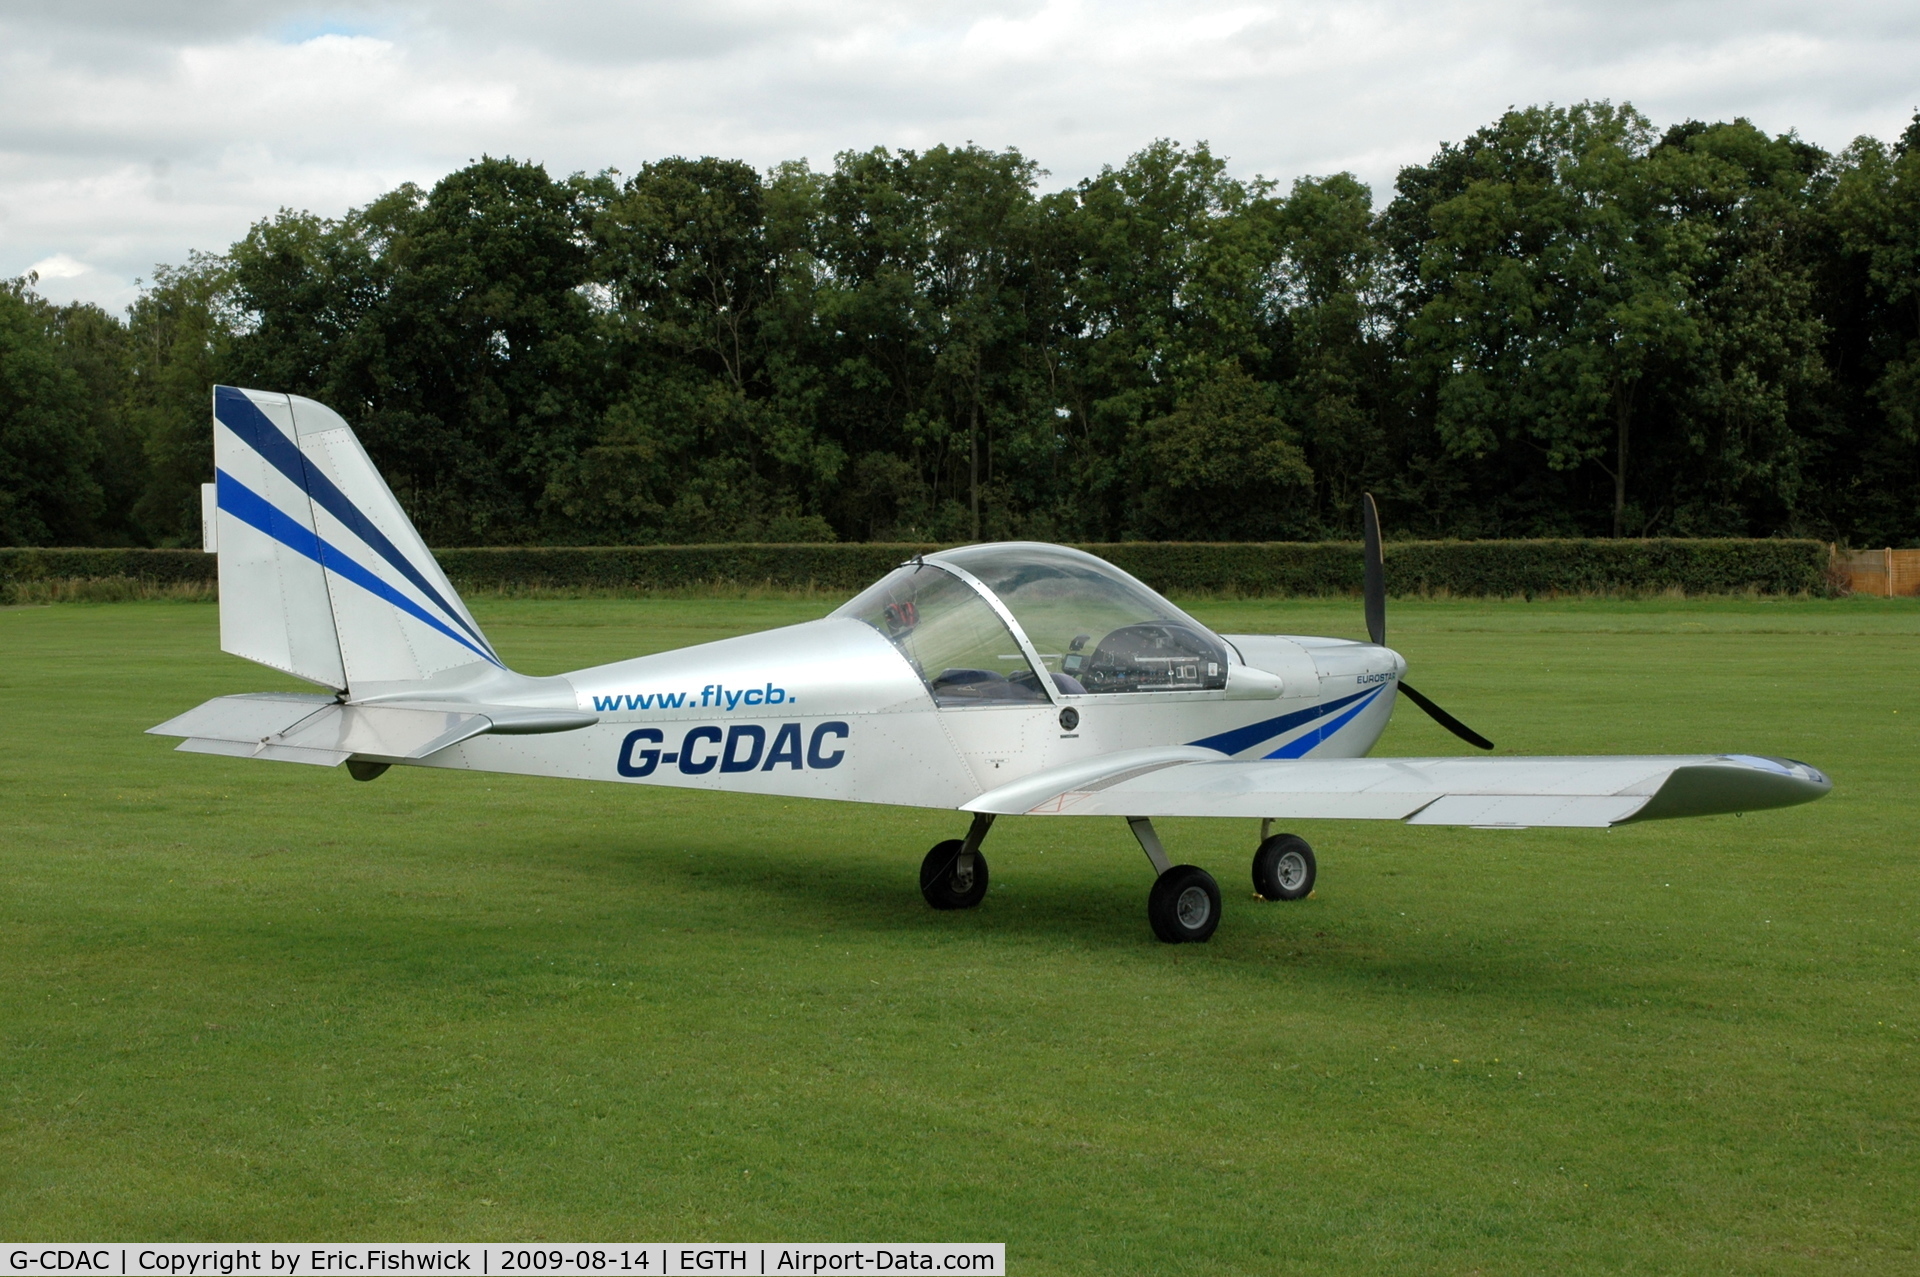 G-CDAC, 2004 Cosmik EV-97 TeamEurostar UK C/N 2116, G-CDAC at Shuttleworth (Old Warden) Aerodrome.